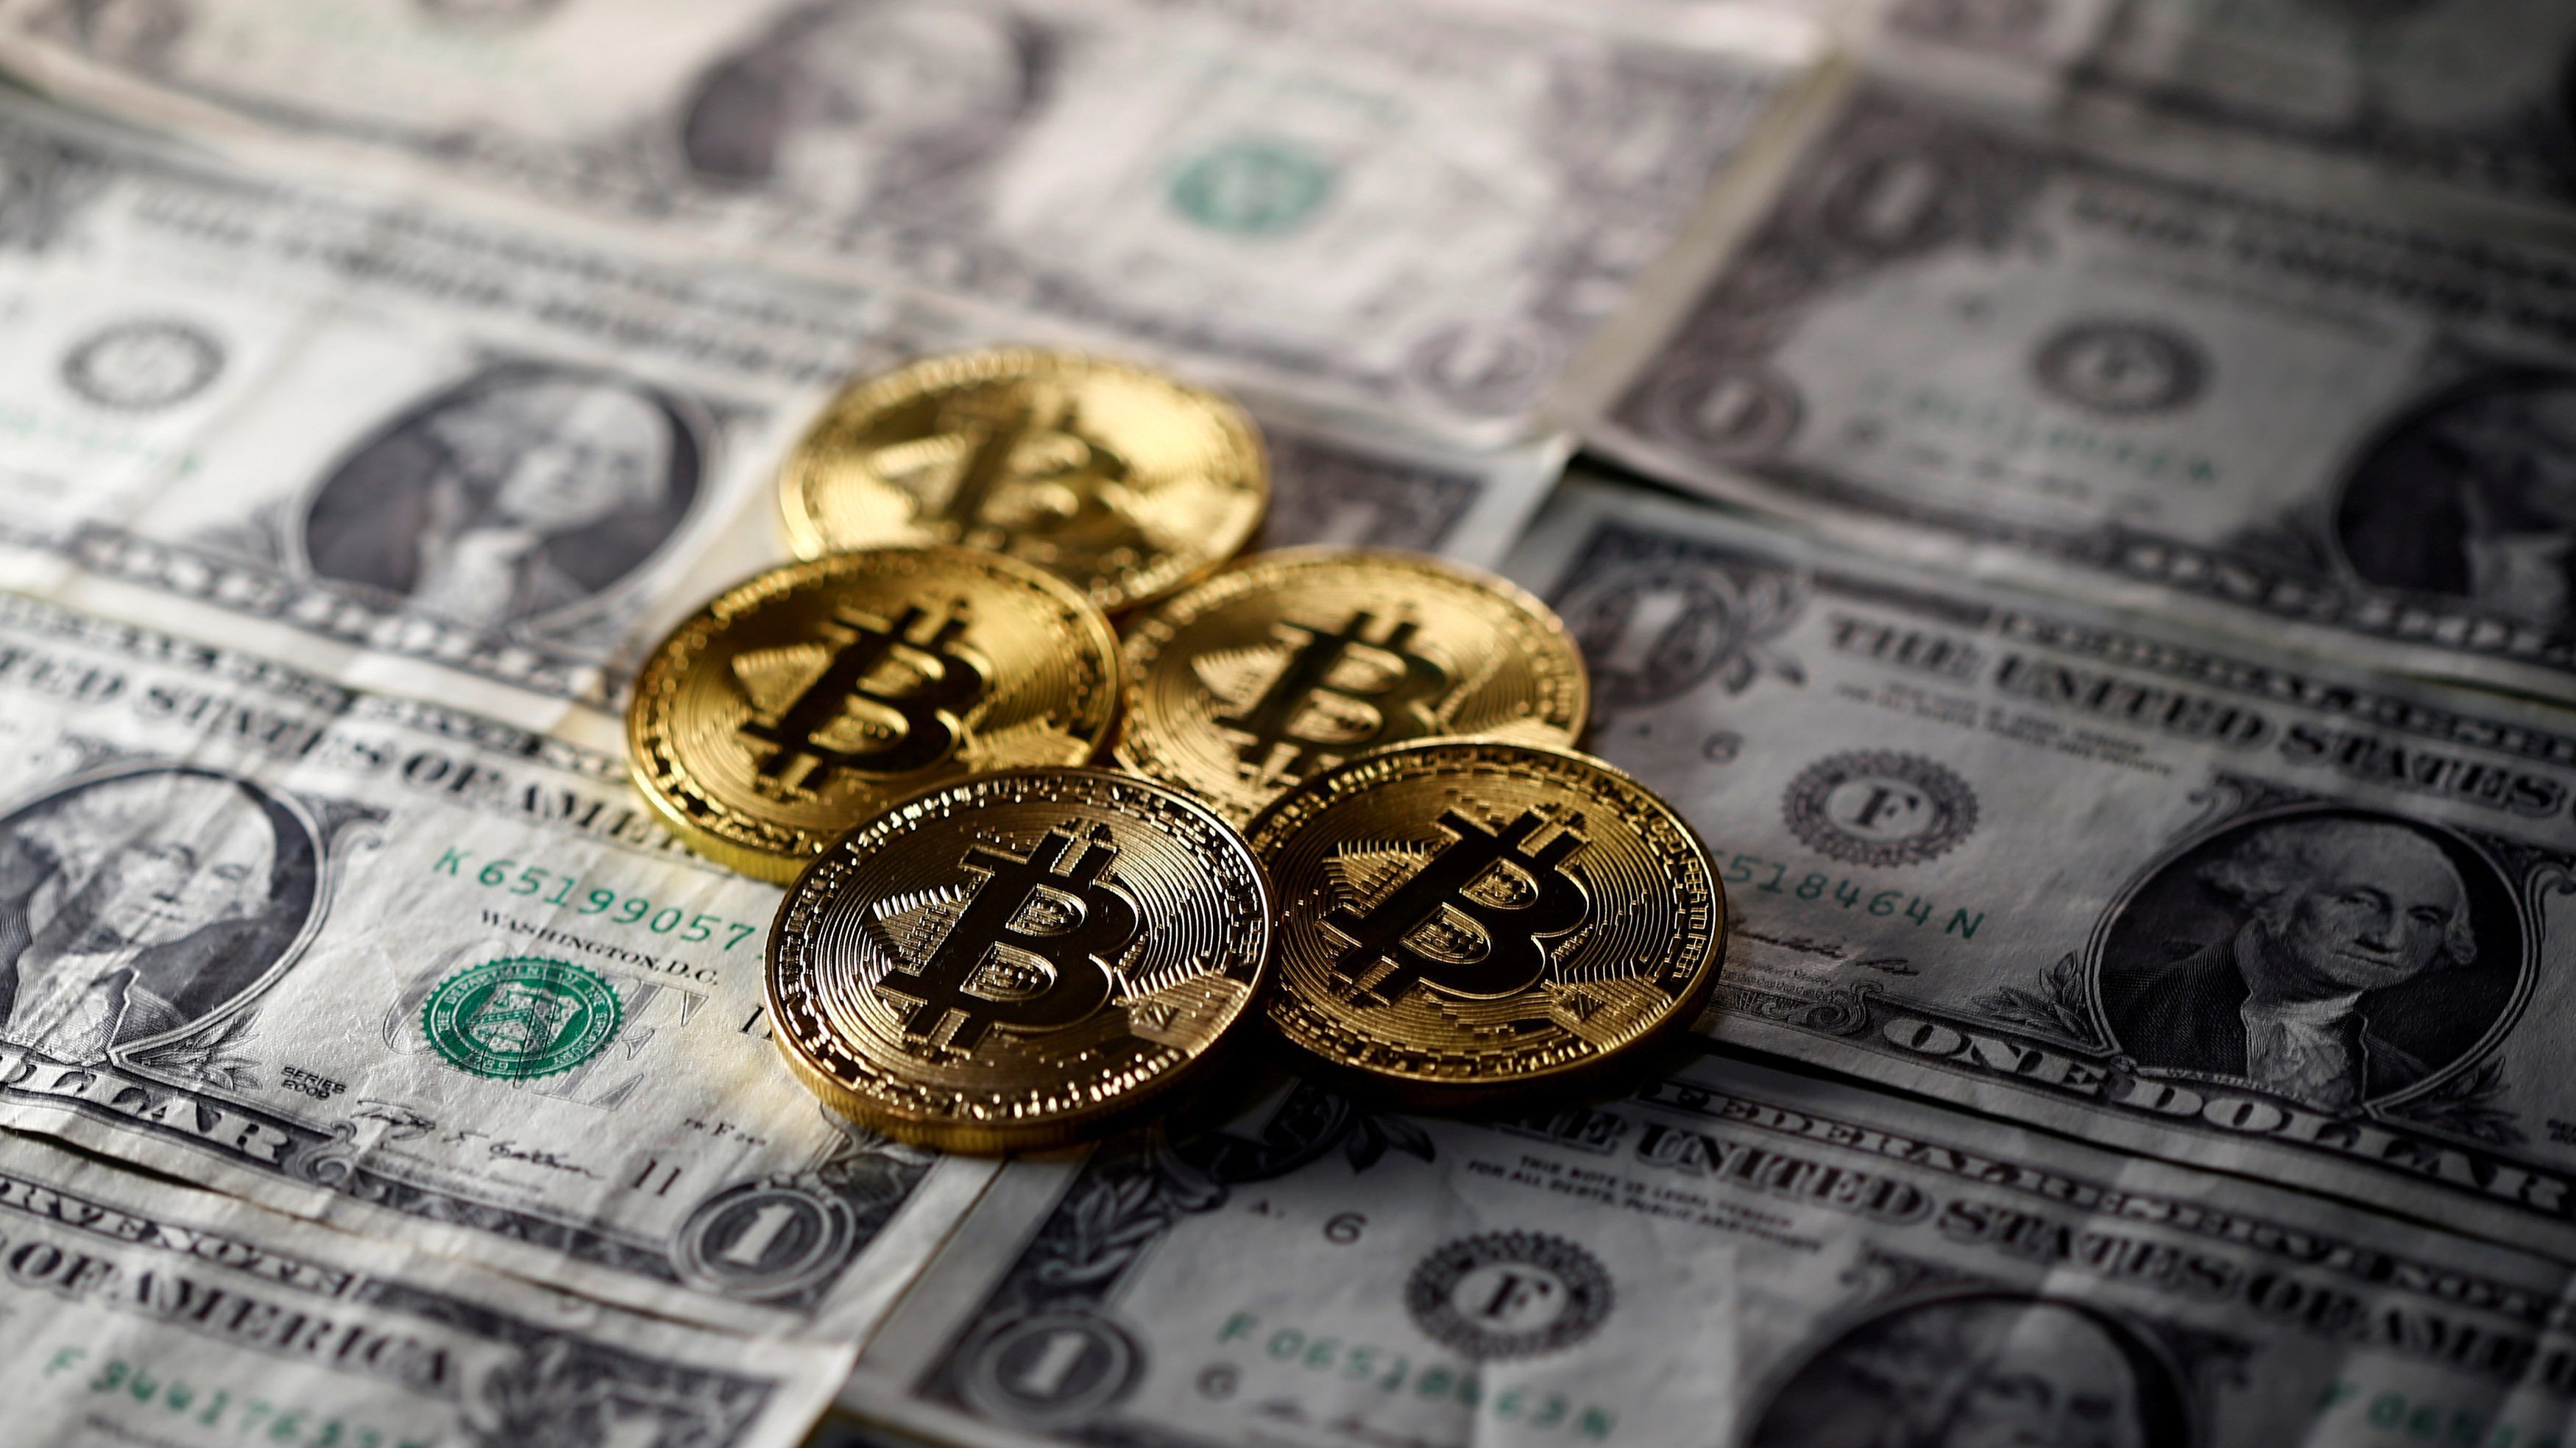 Bitcoin as a Nich Asset: ING Bank Analyst’s View